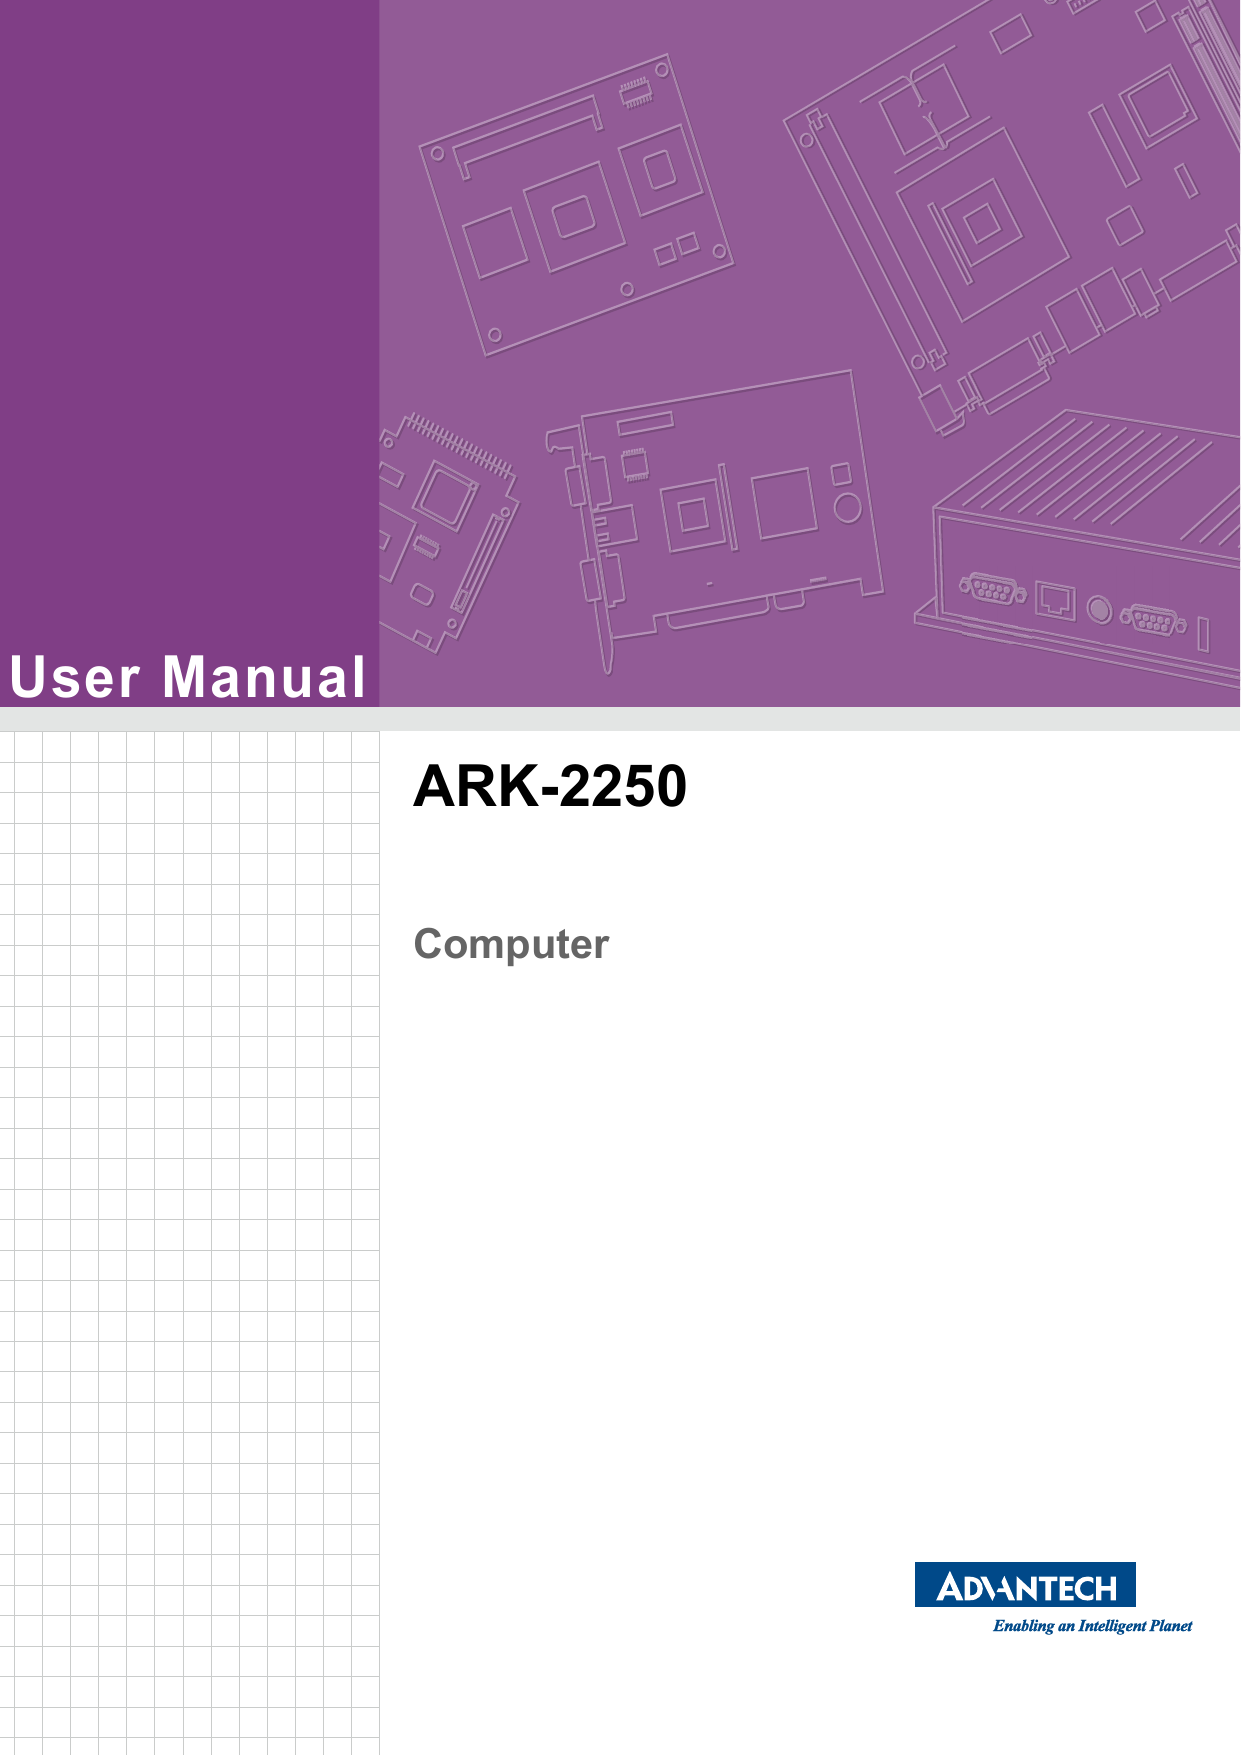 User ManualARK-2250Computer